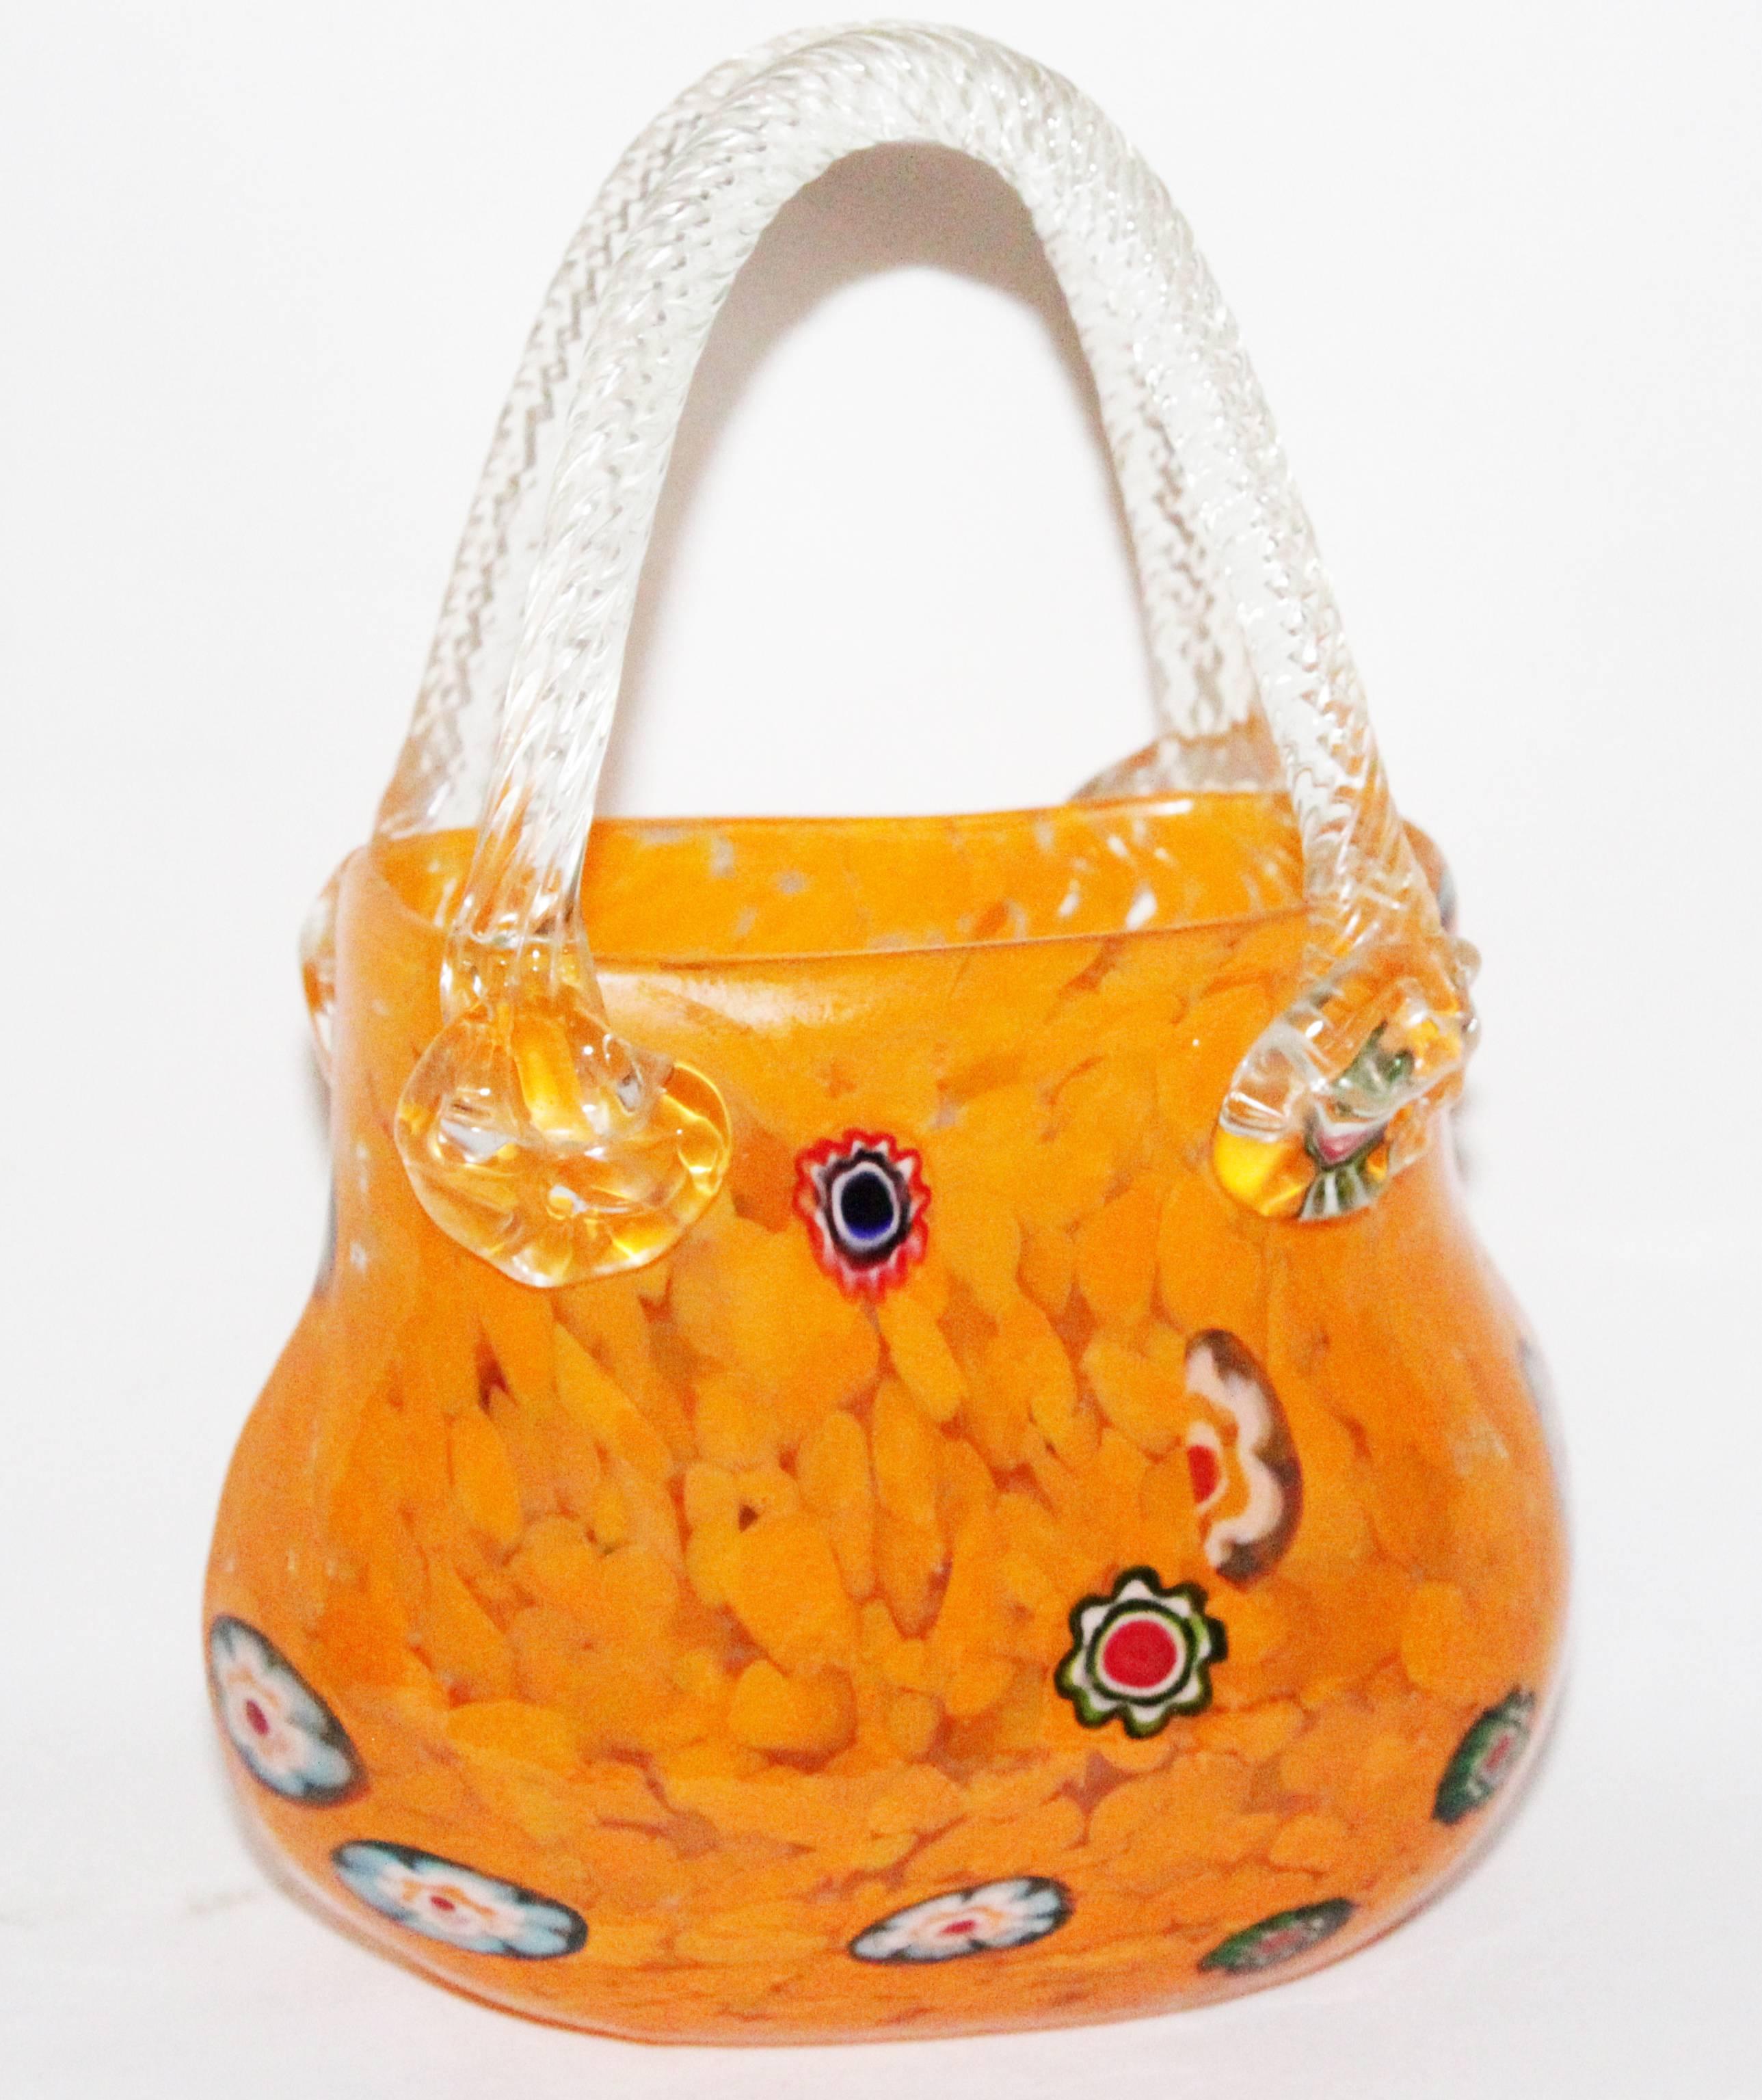 murano glass handbag